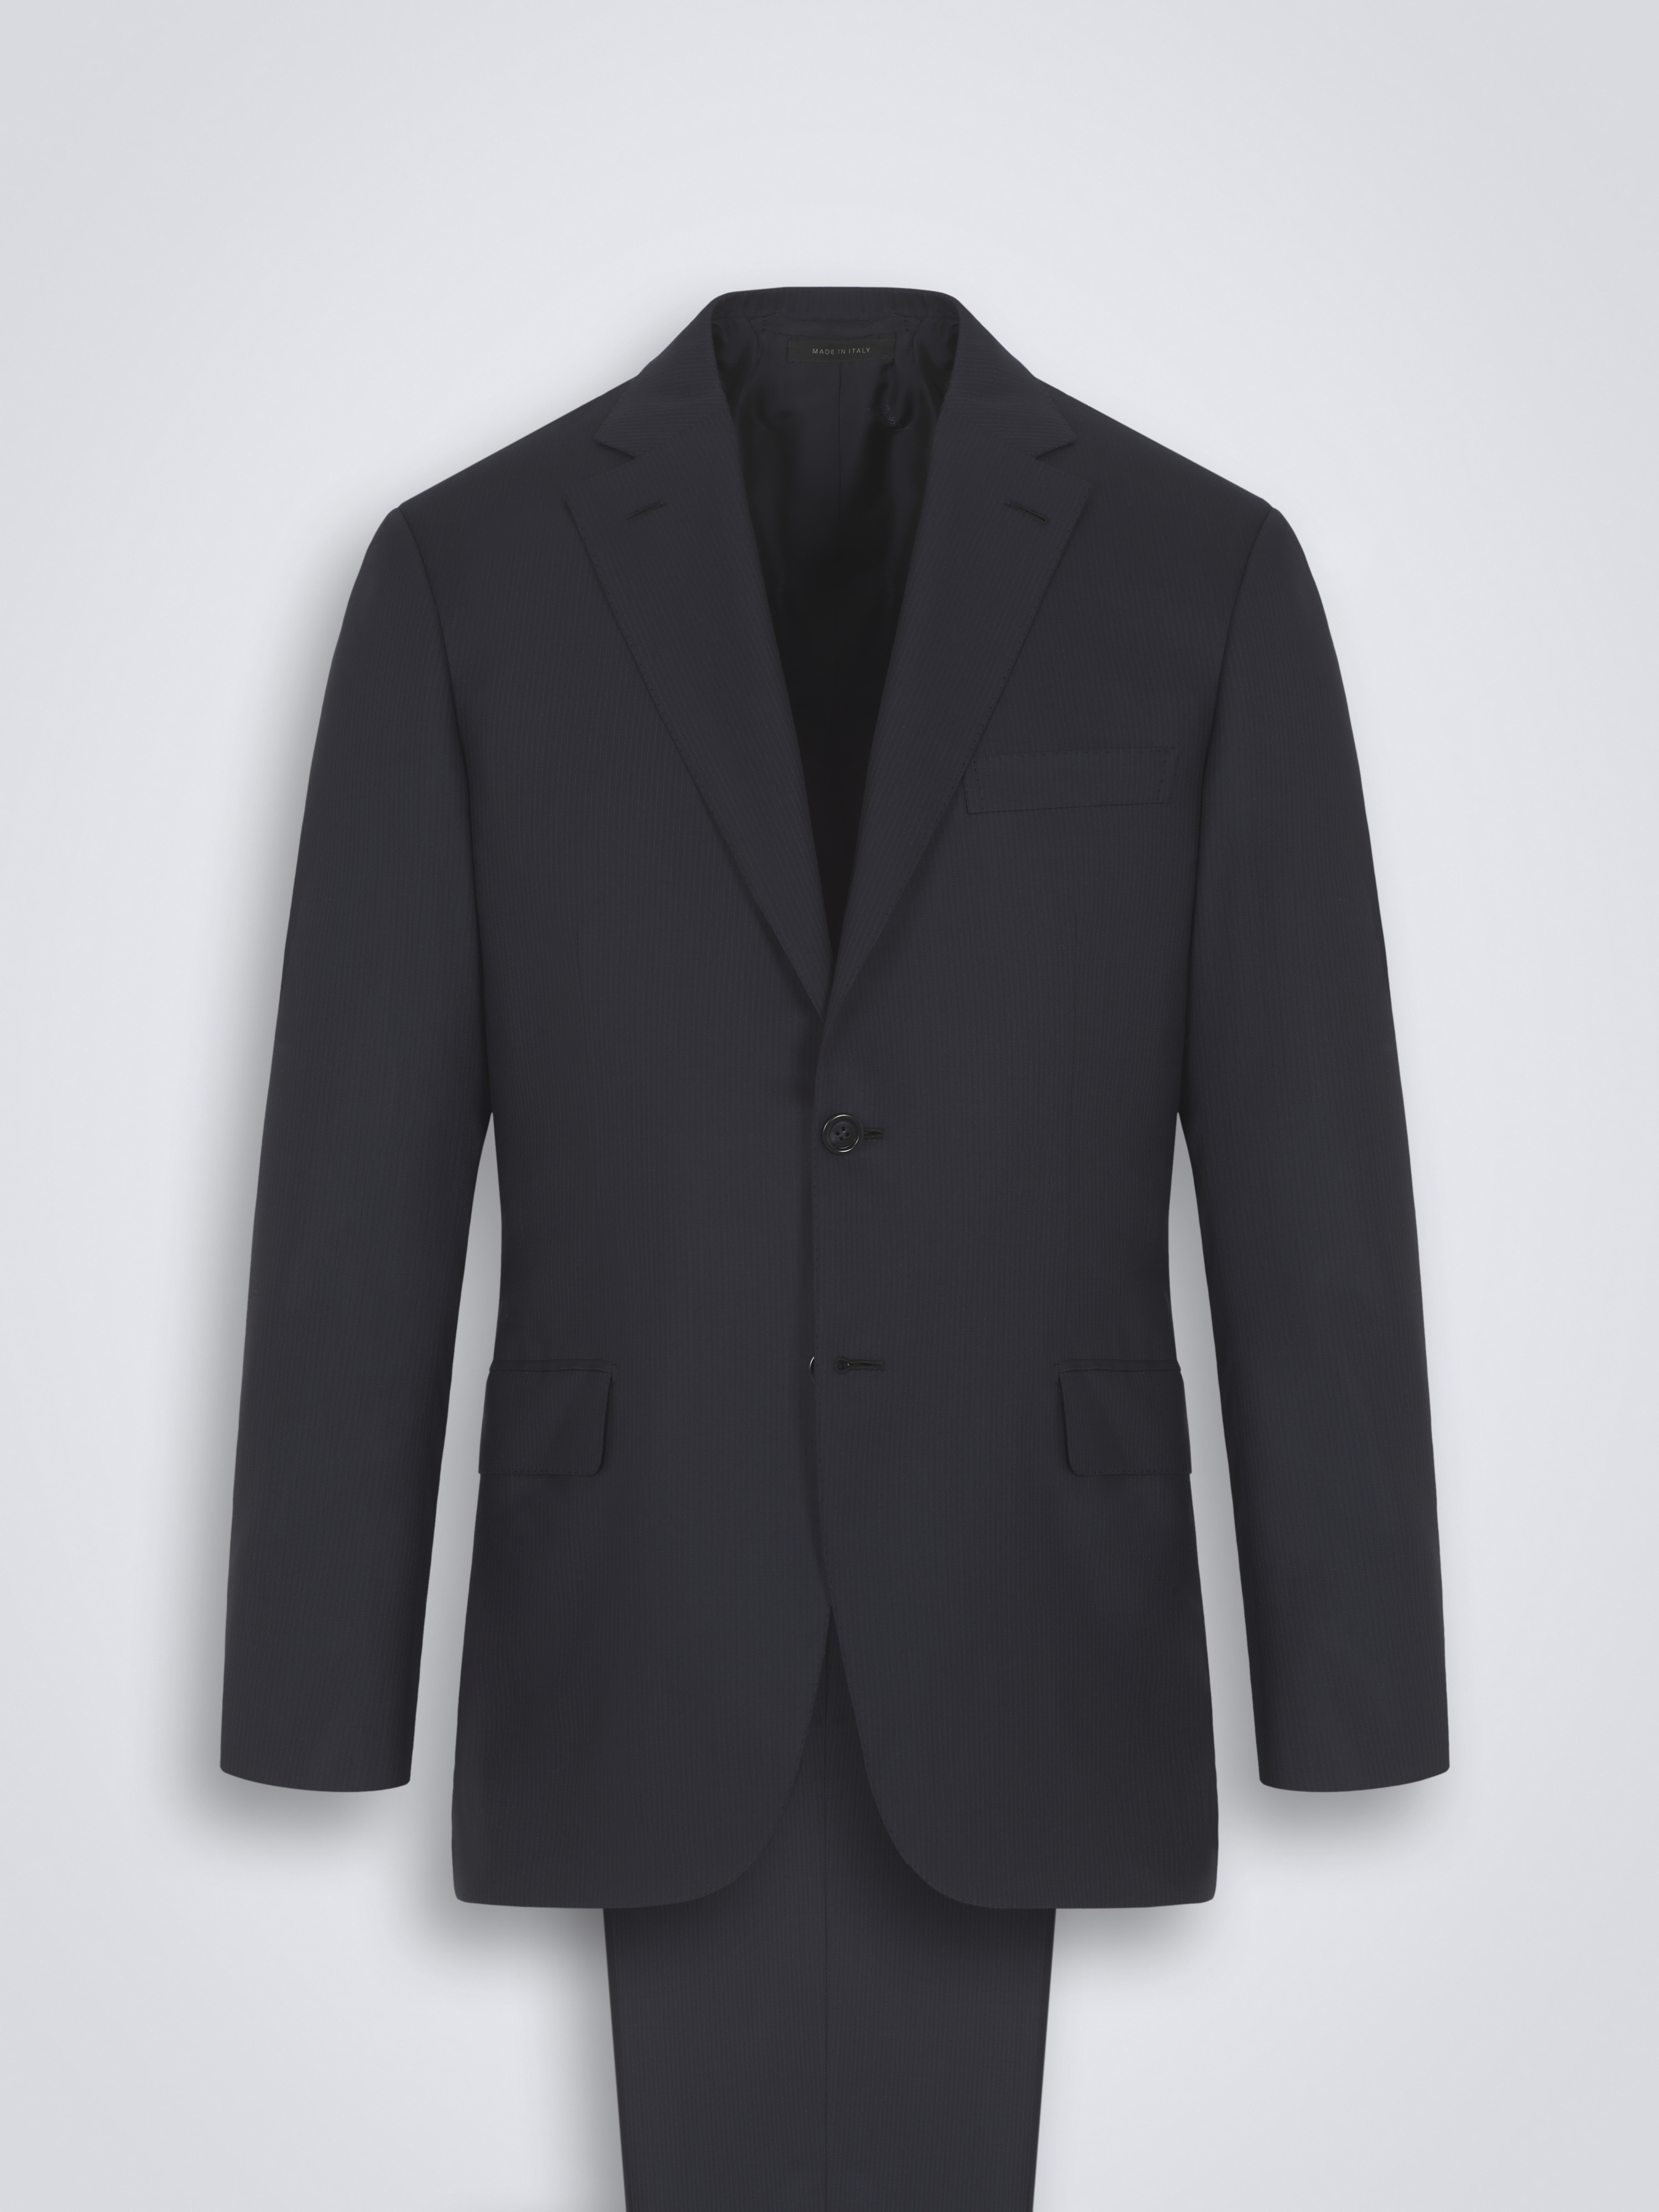 Essential ブルニコ スーツ ネイビーブルースーパー160バージンウール 